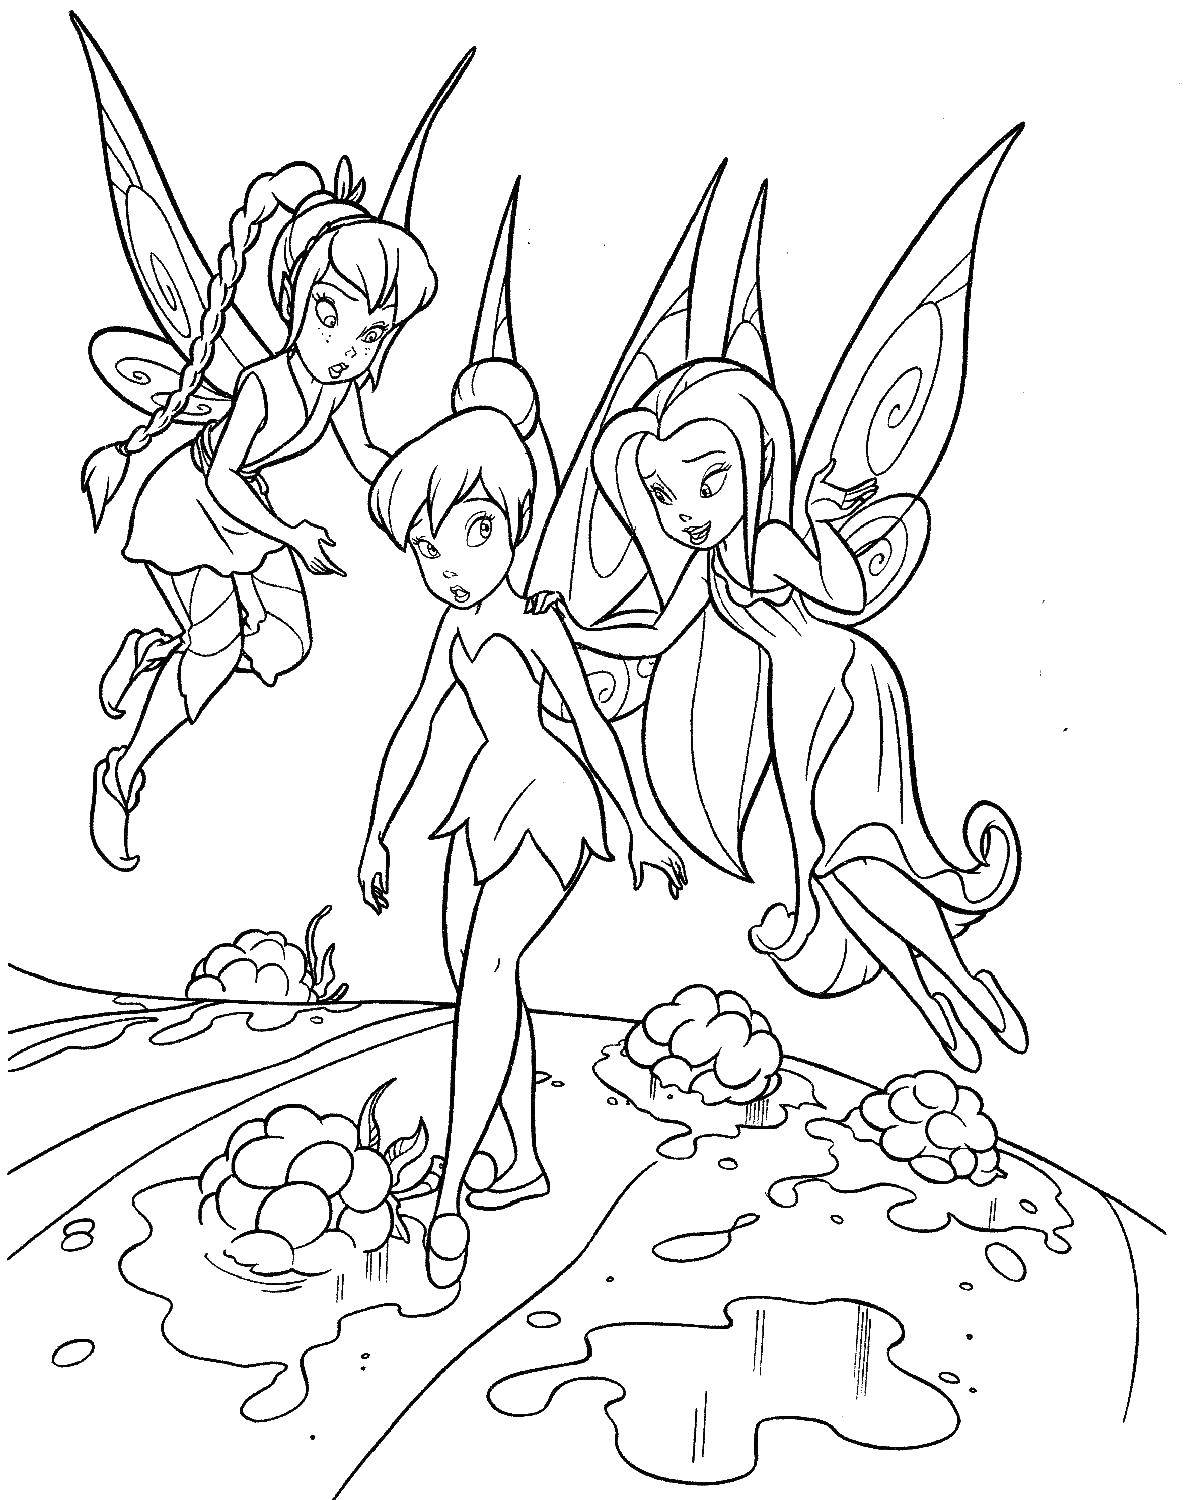 Coloring The three good fairies. Category fairies. Tags:  fairies , wings, girl.